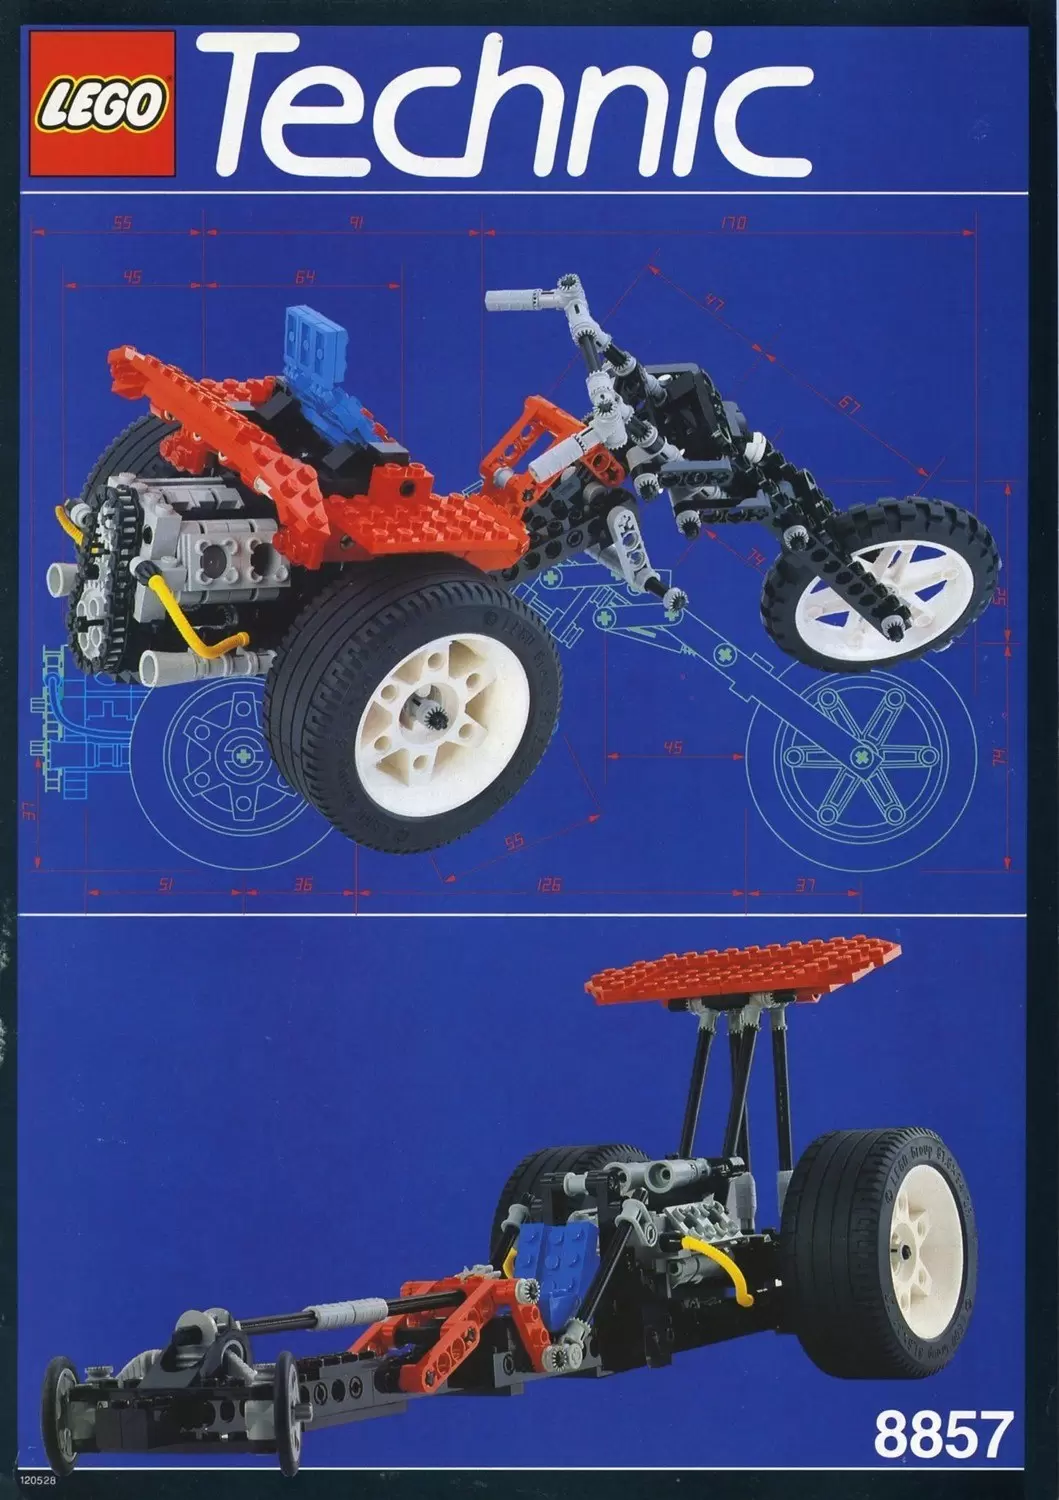 LEGO Technic - Motorcycles